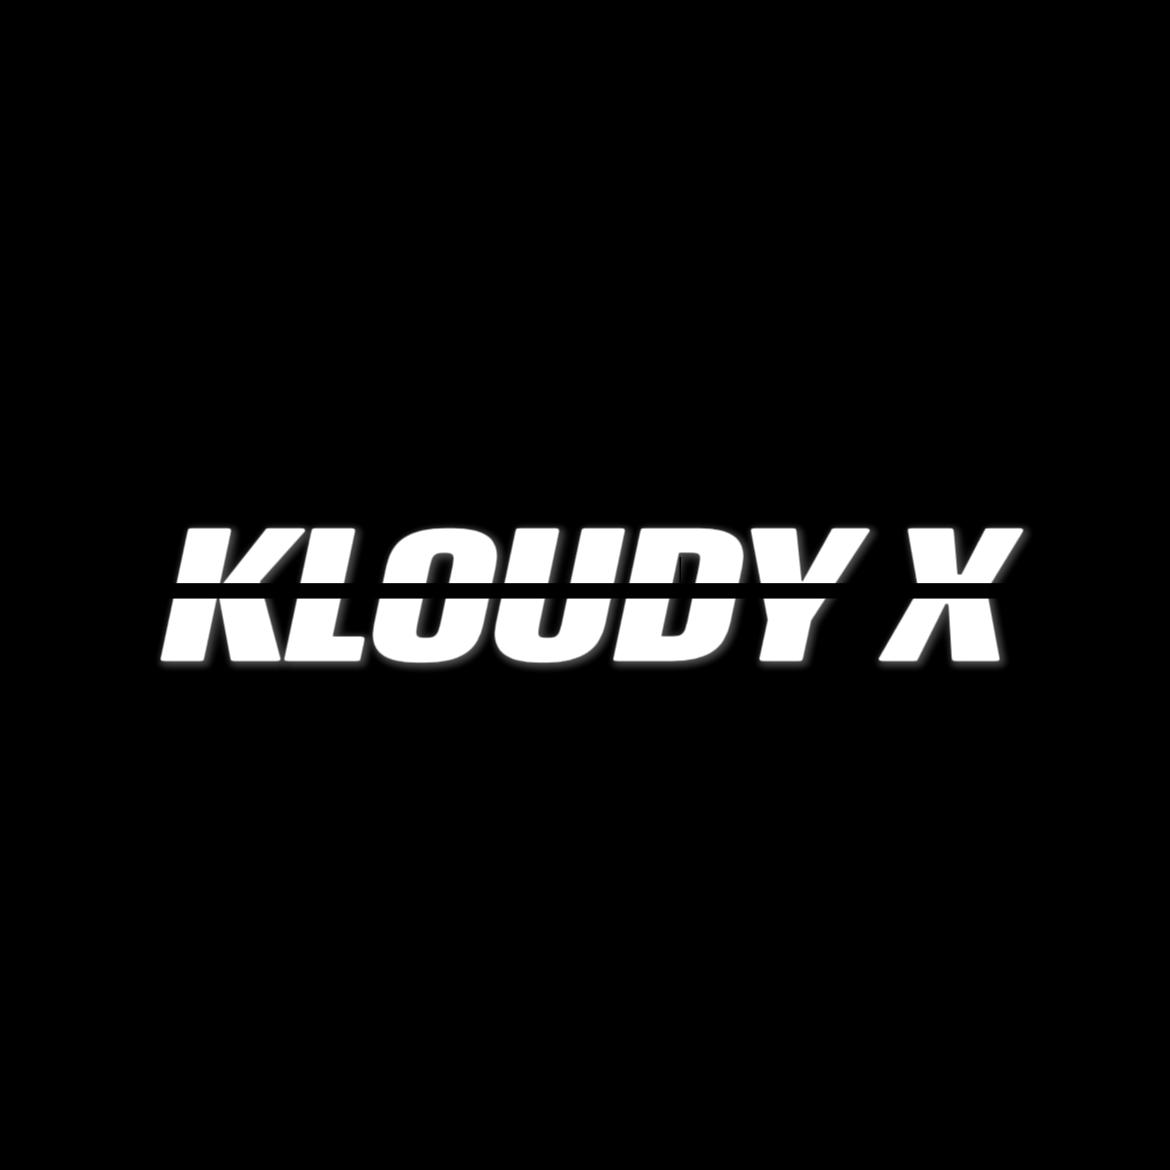 kloudy_x